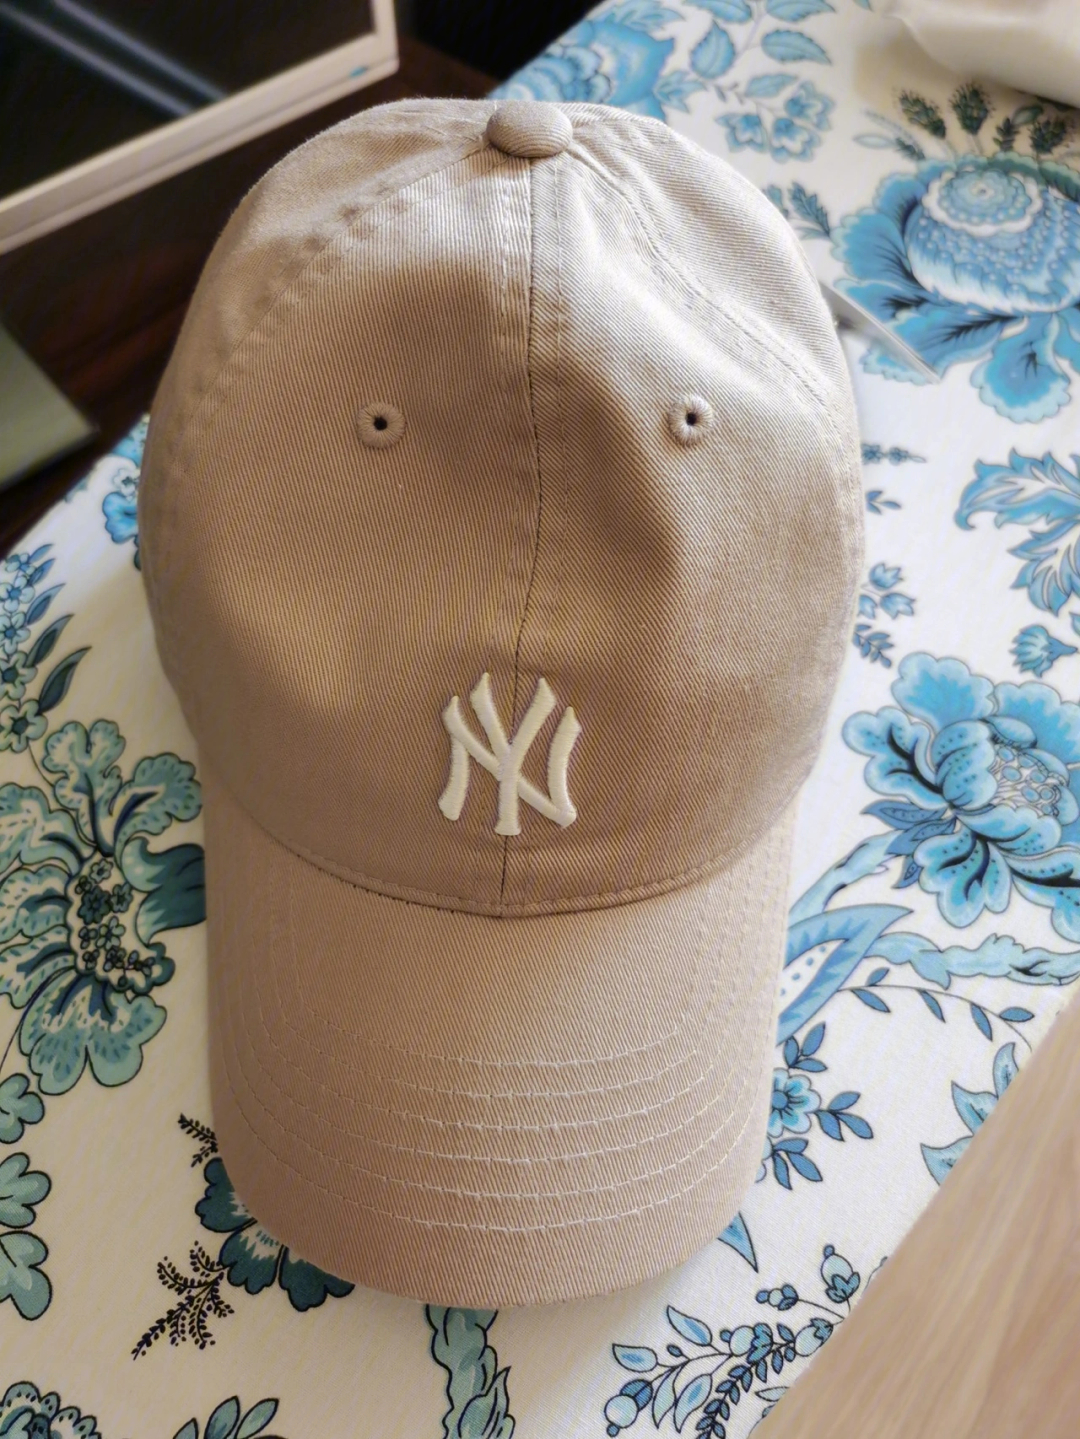 my联名棒球帽正品图片